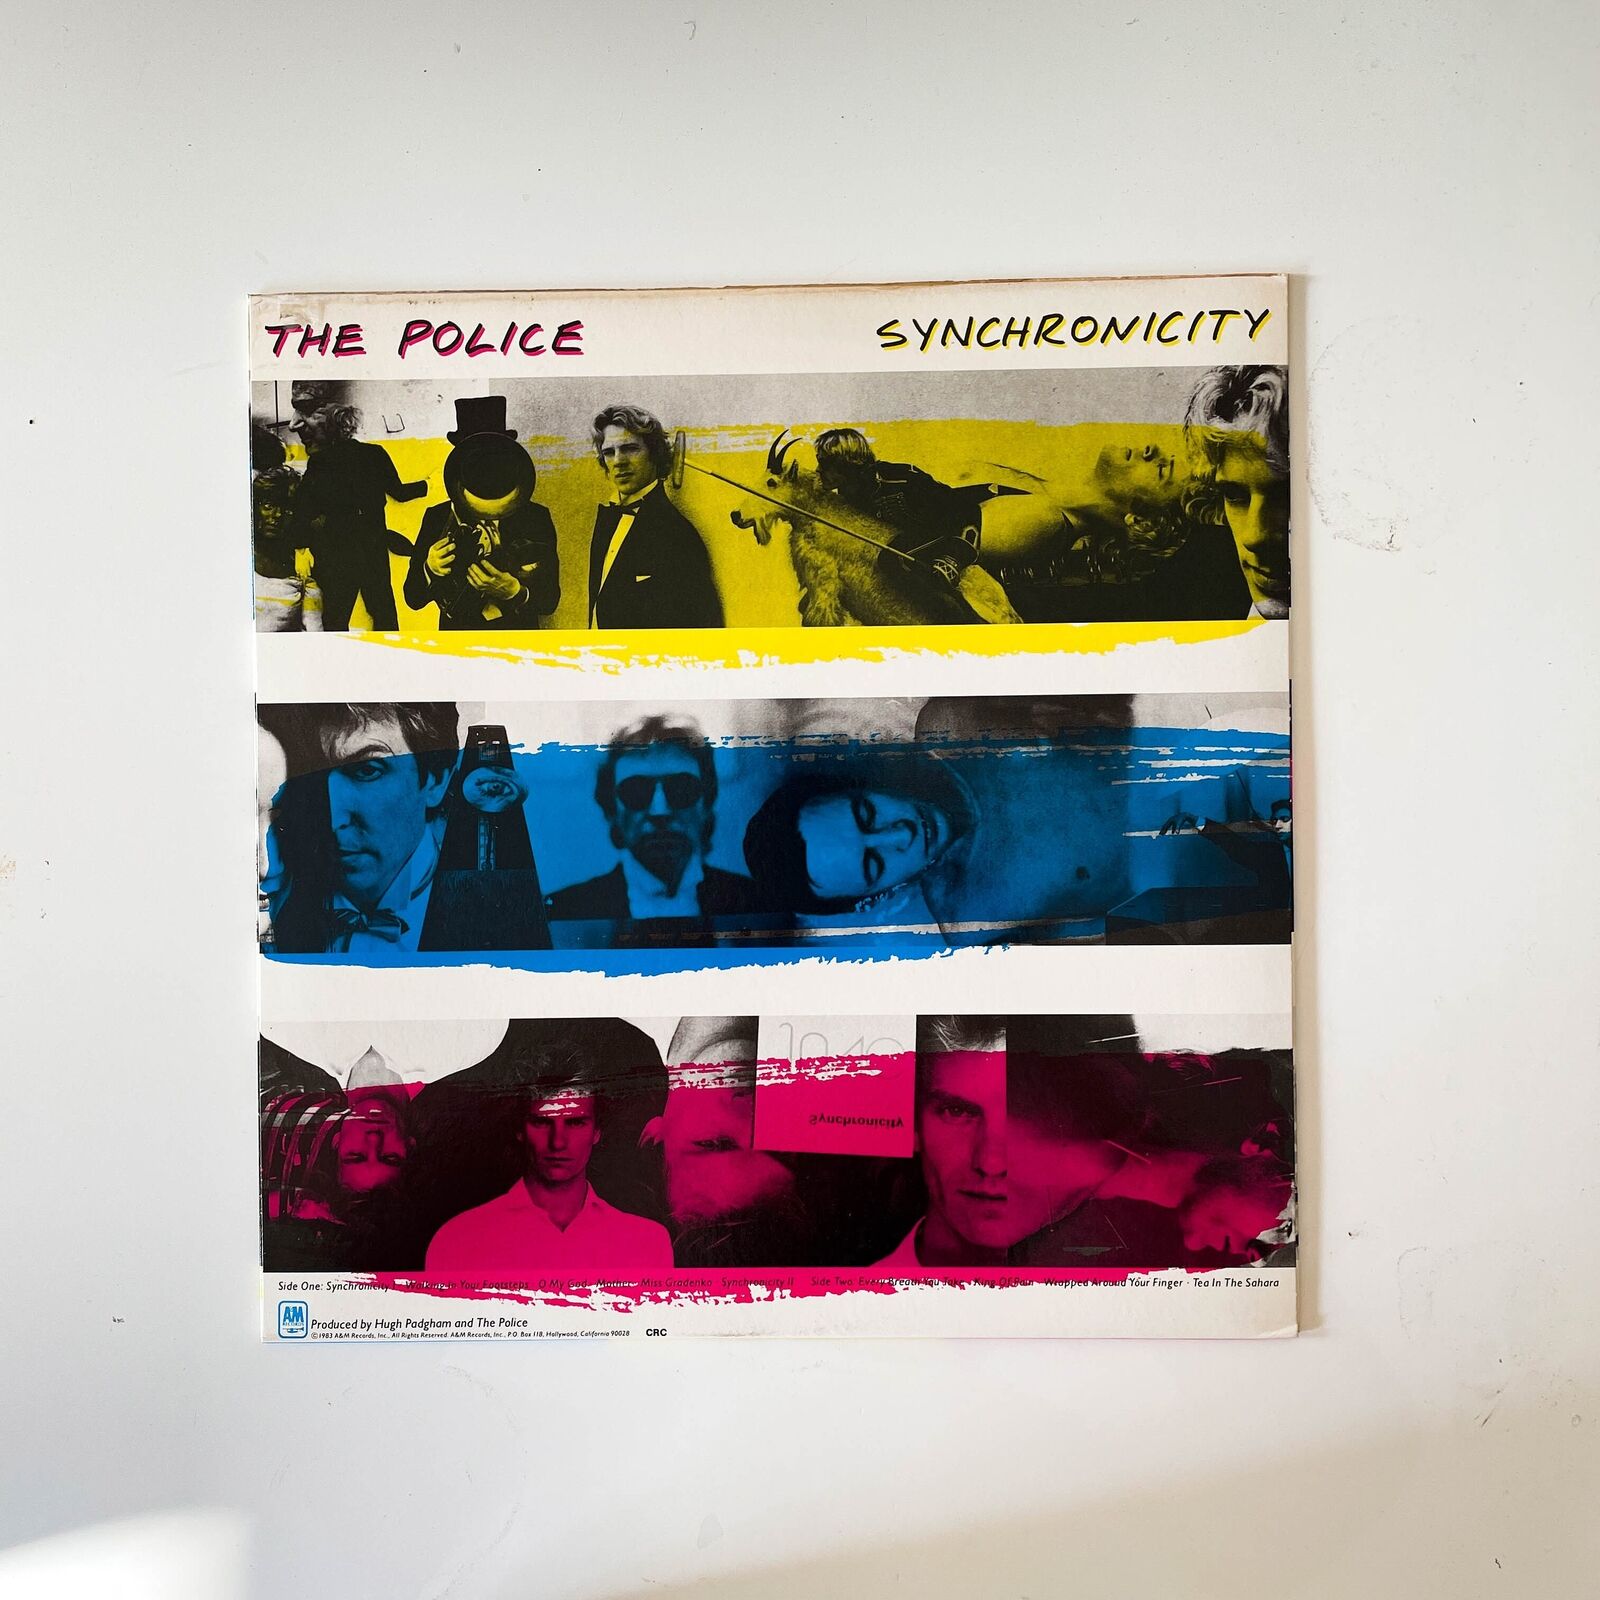 The Police - Synchronicity - Vinyl LP Record - 1983